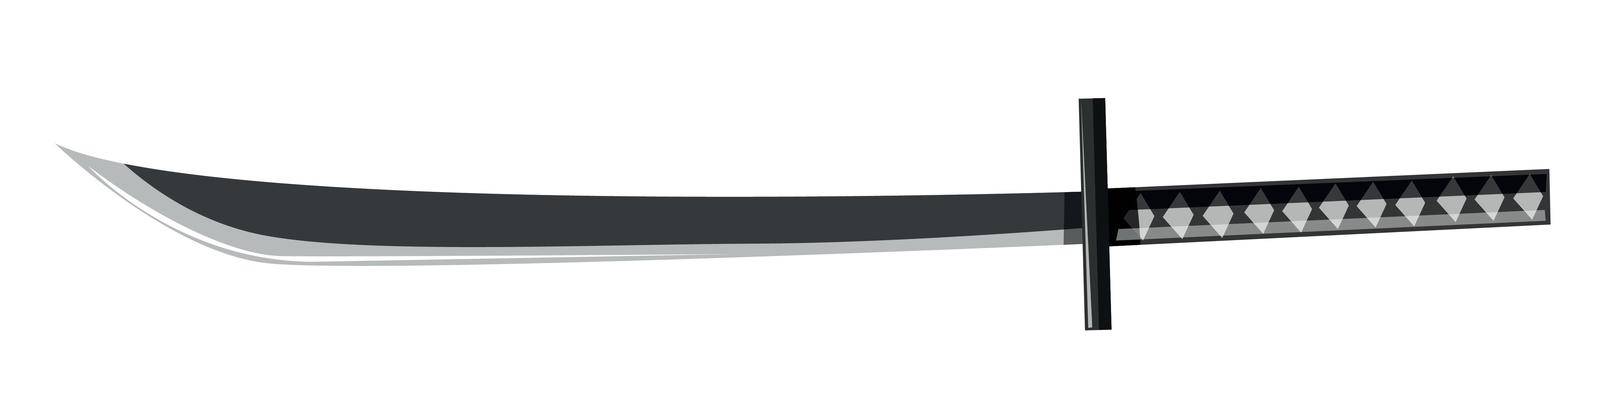 Japanese sword with sharp blade illustration